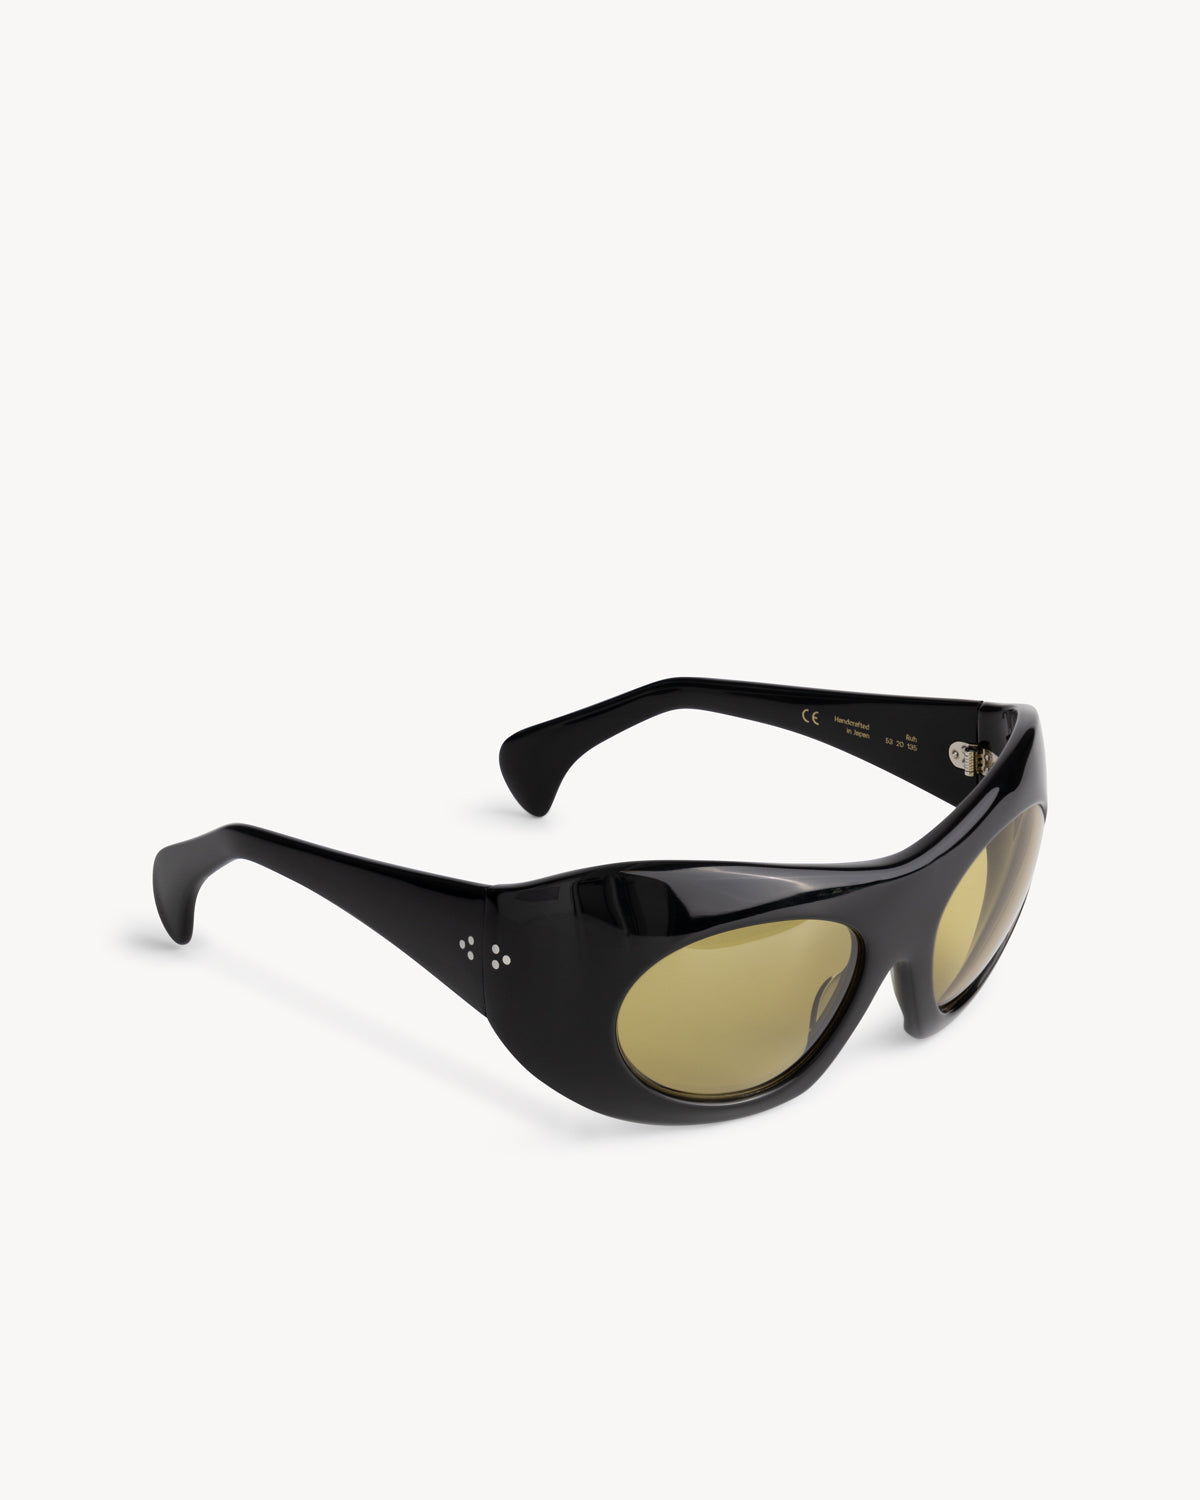 Port Tanger Ruh Sunglasses in Black acetate and Warm Olive Lenses 2